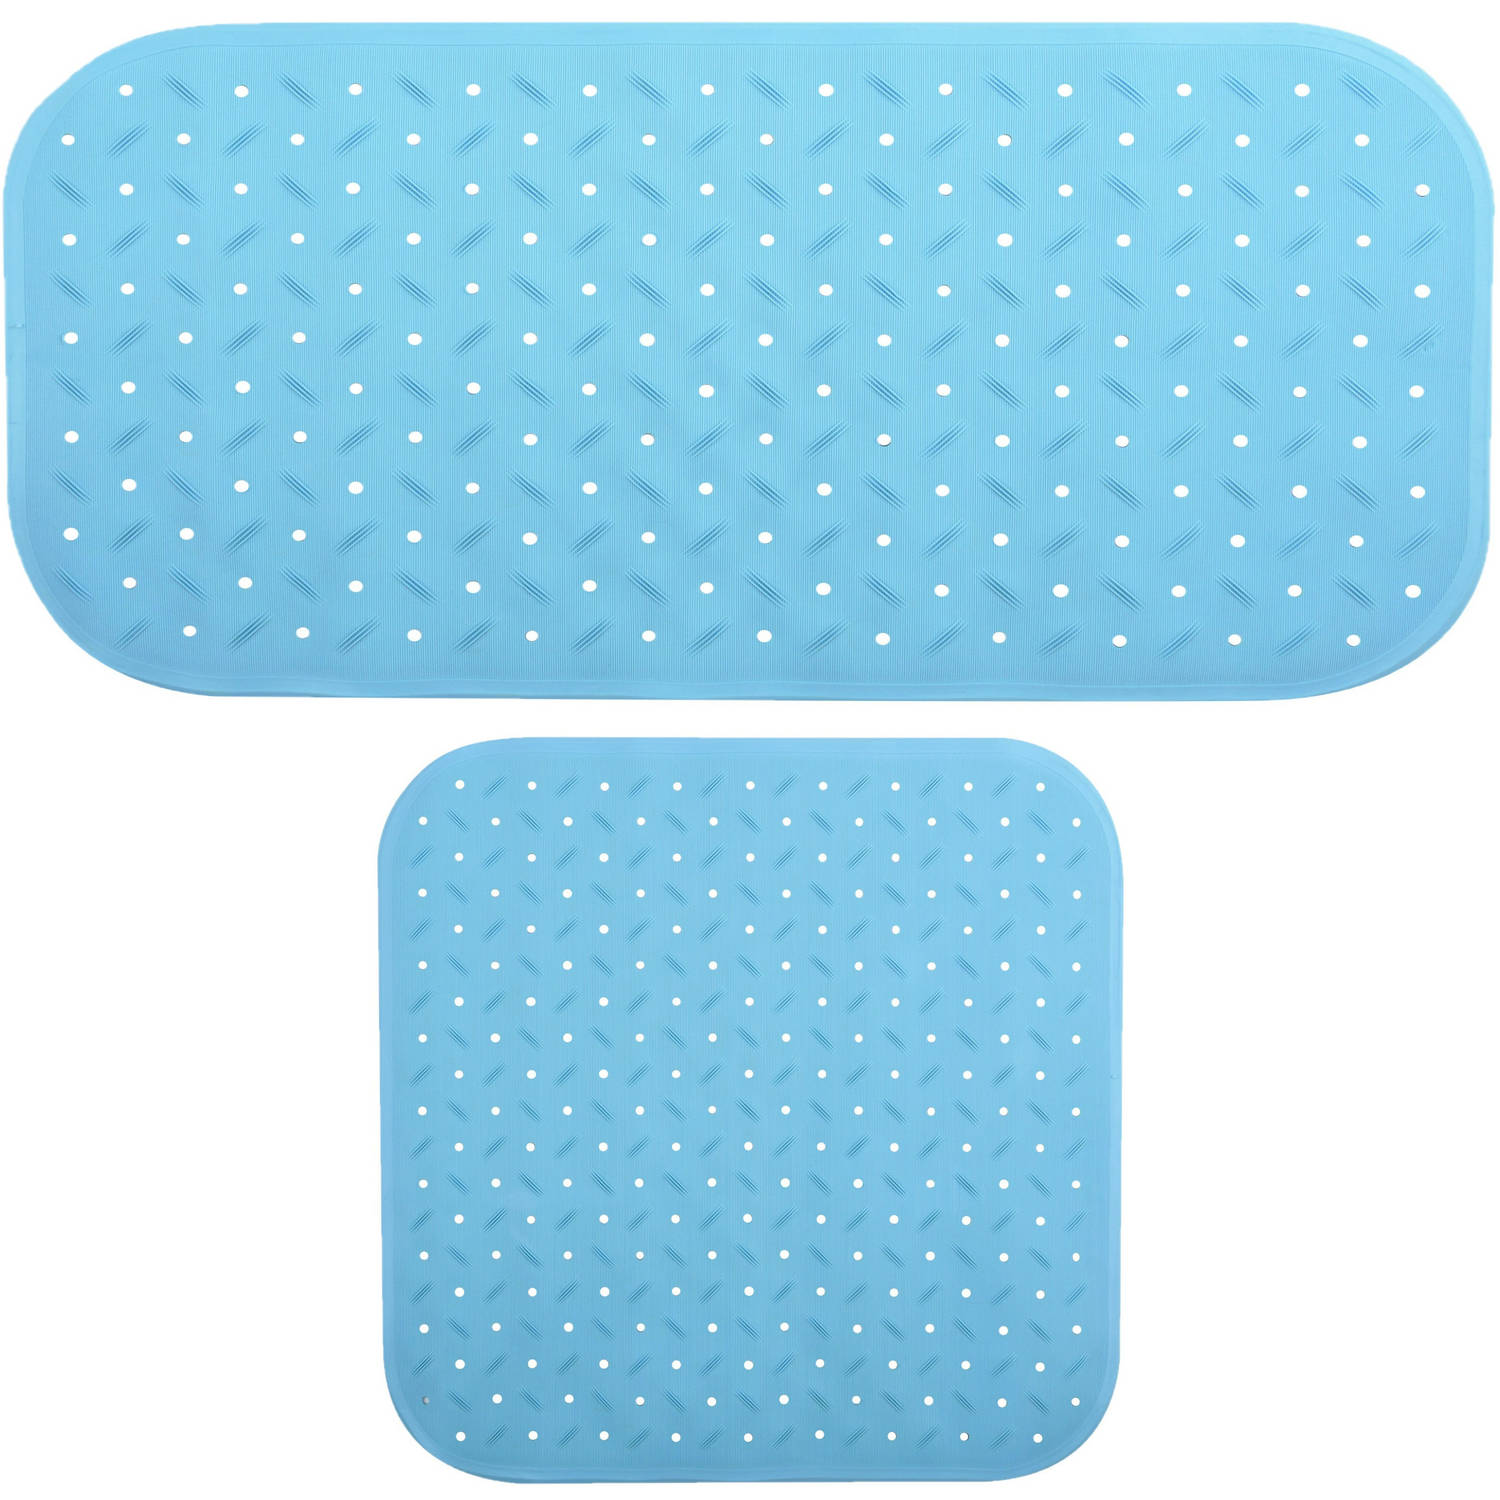 MSV Douche-bad anti-slip matten set badkamer rubber 2x stuks lichtblauw 2 formaten Badmatjes